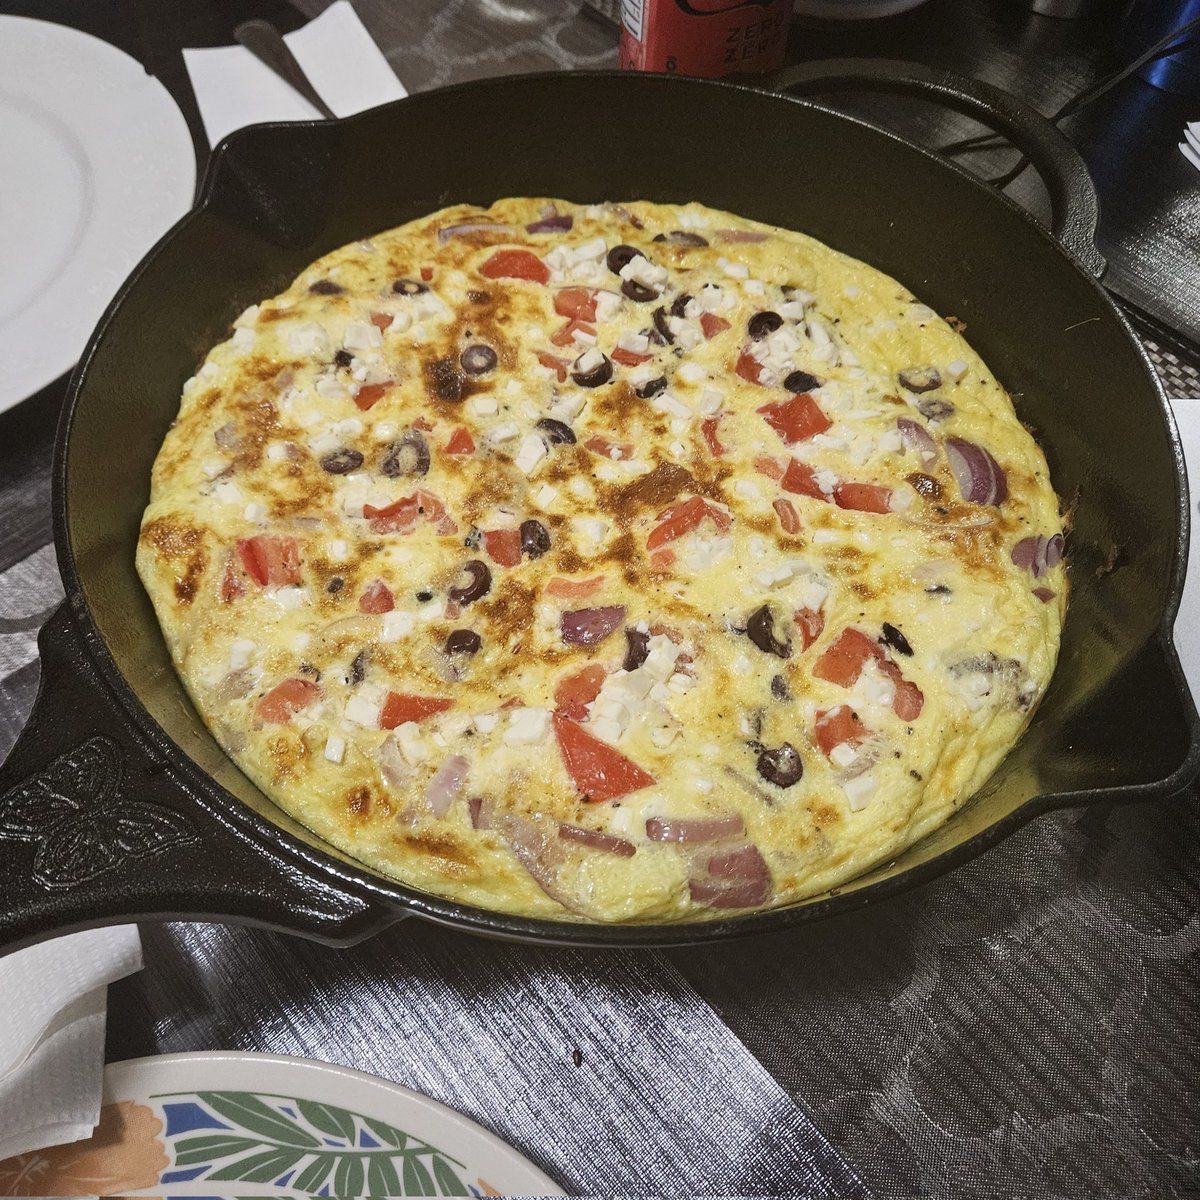 Mediterranean Frittata 
#eggs #milk #fetacheese #kalamataolives #tomatoes #chefathome #homechef #cookingathome #goodeats #homecooking #healthyeats  #tasty #sogood #yummy #mediterraneandiet  #Frittata